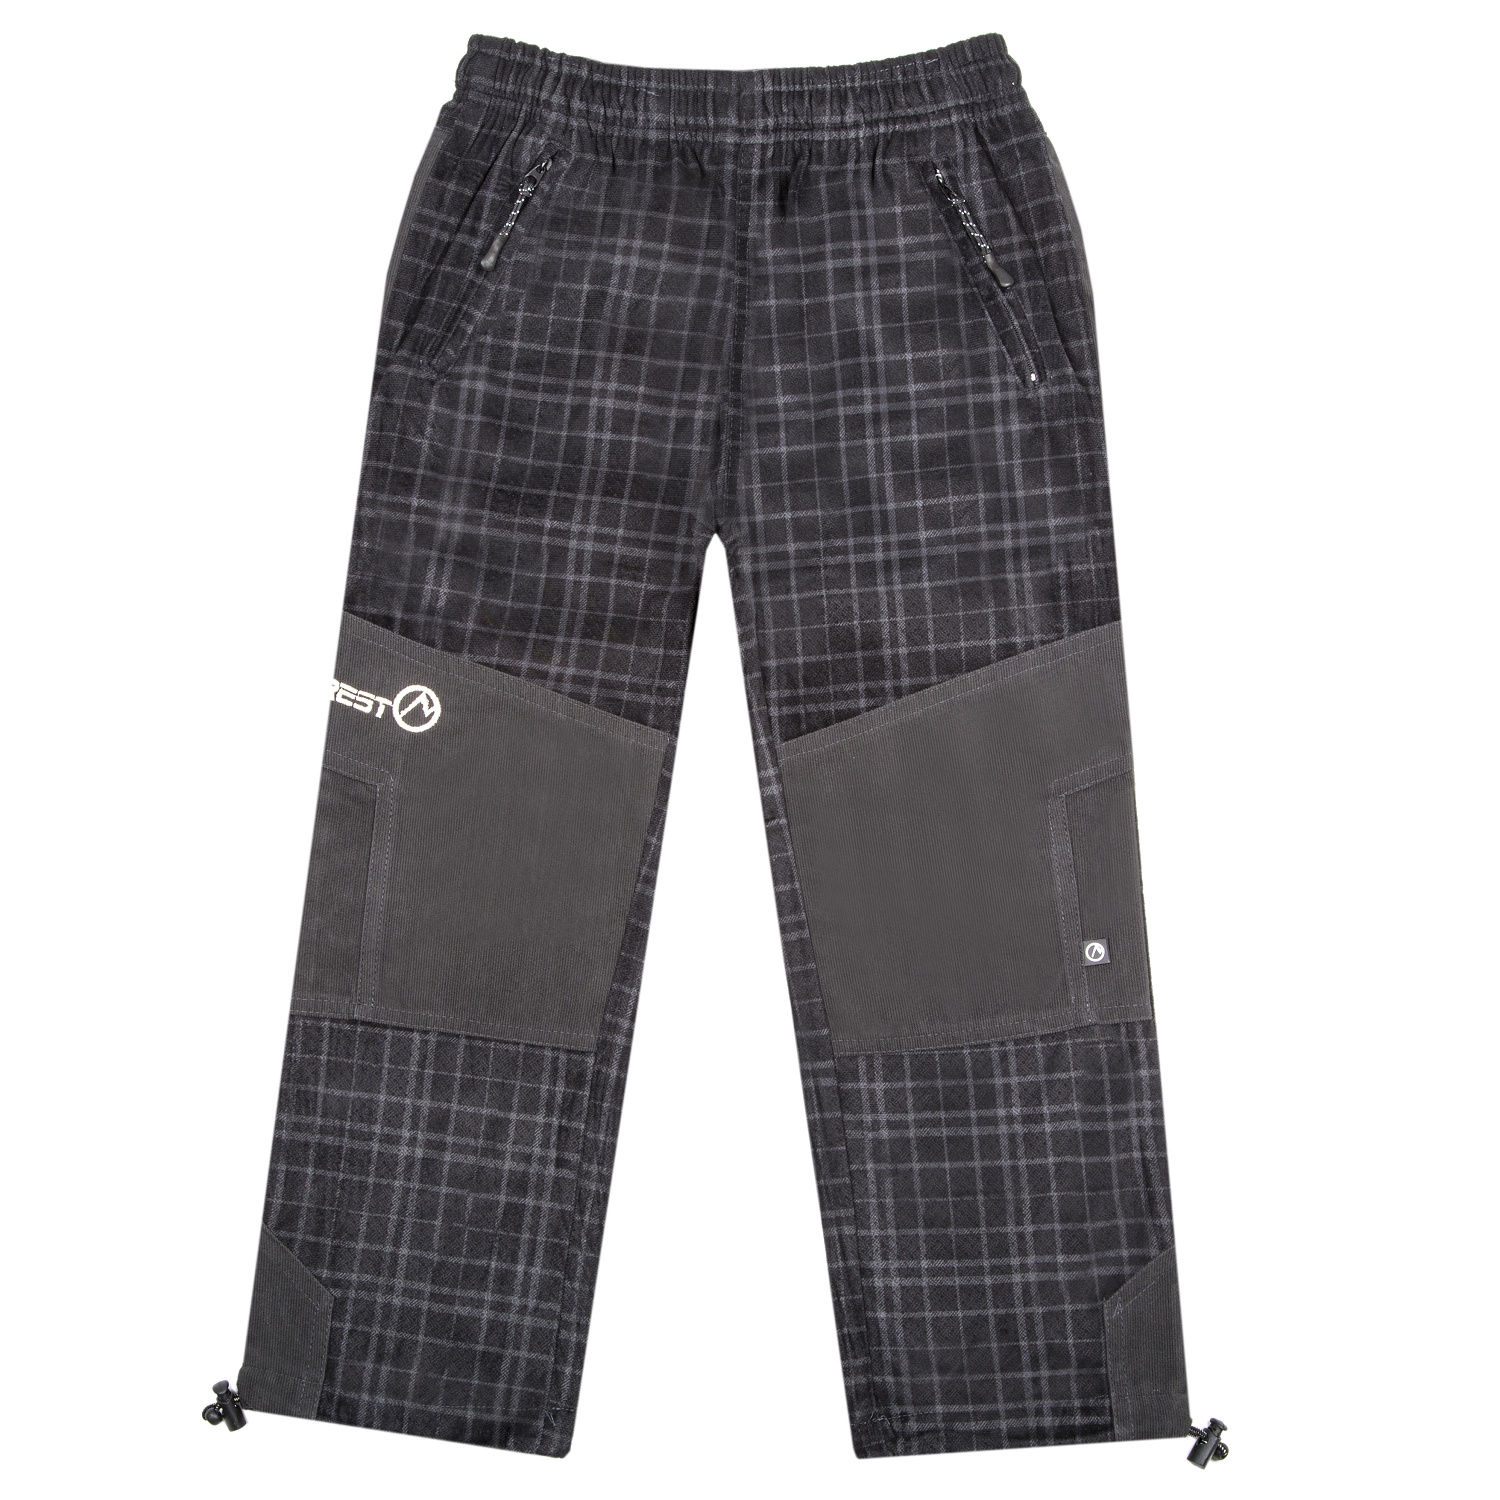 Chlapecké outdoorové kalhoty - NEVEREST F-922cc, šedá Barva: Šedá, Velikost: 116